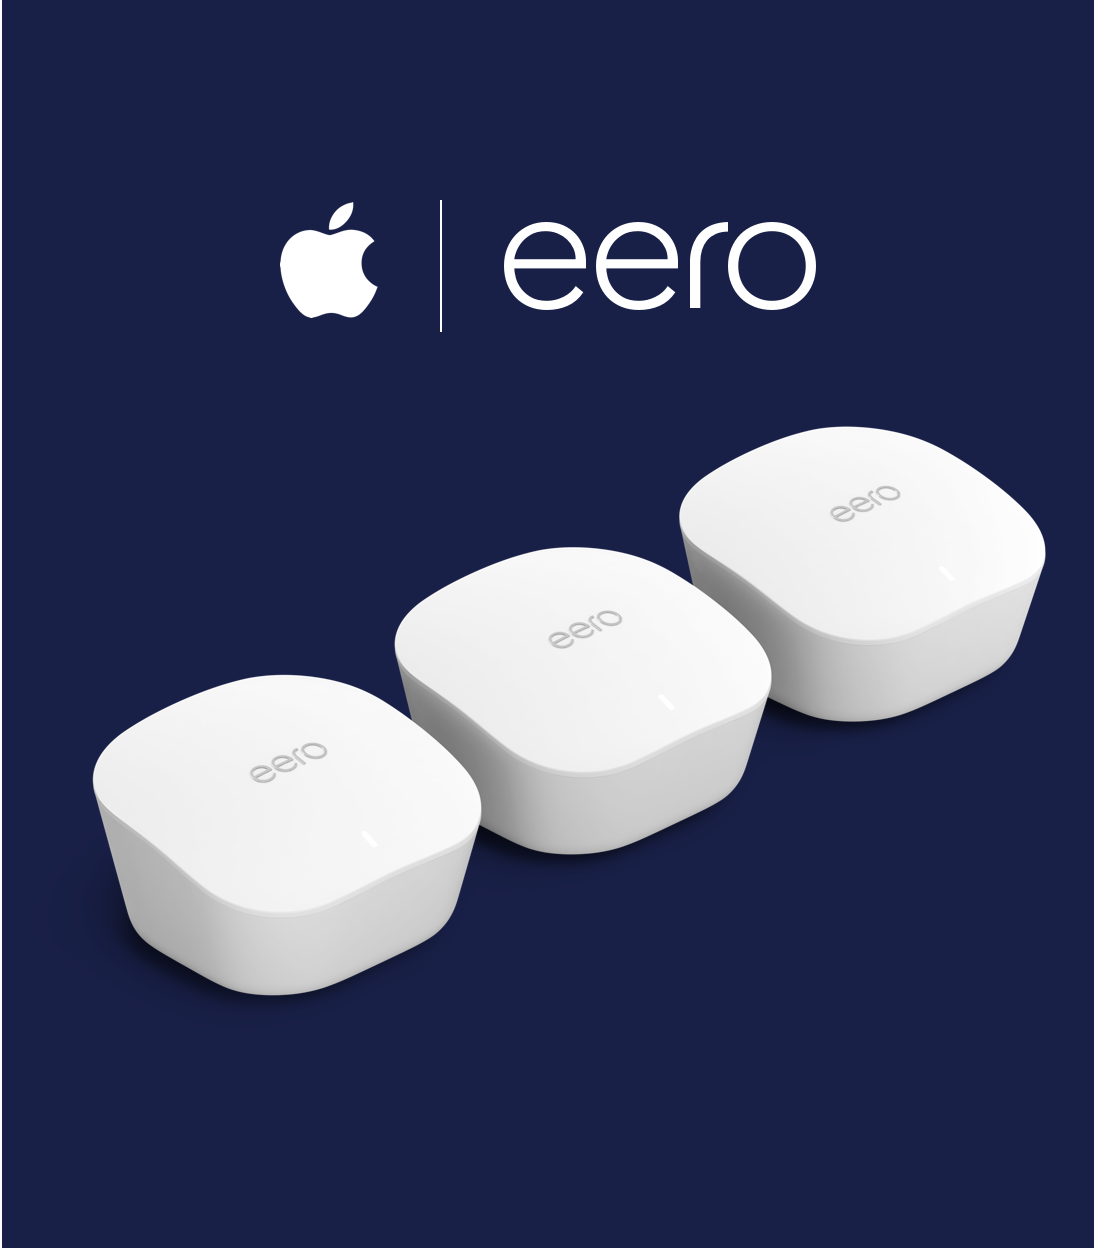 eero Now Supports Apple HomeKit – The Download